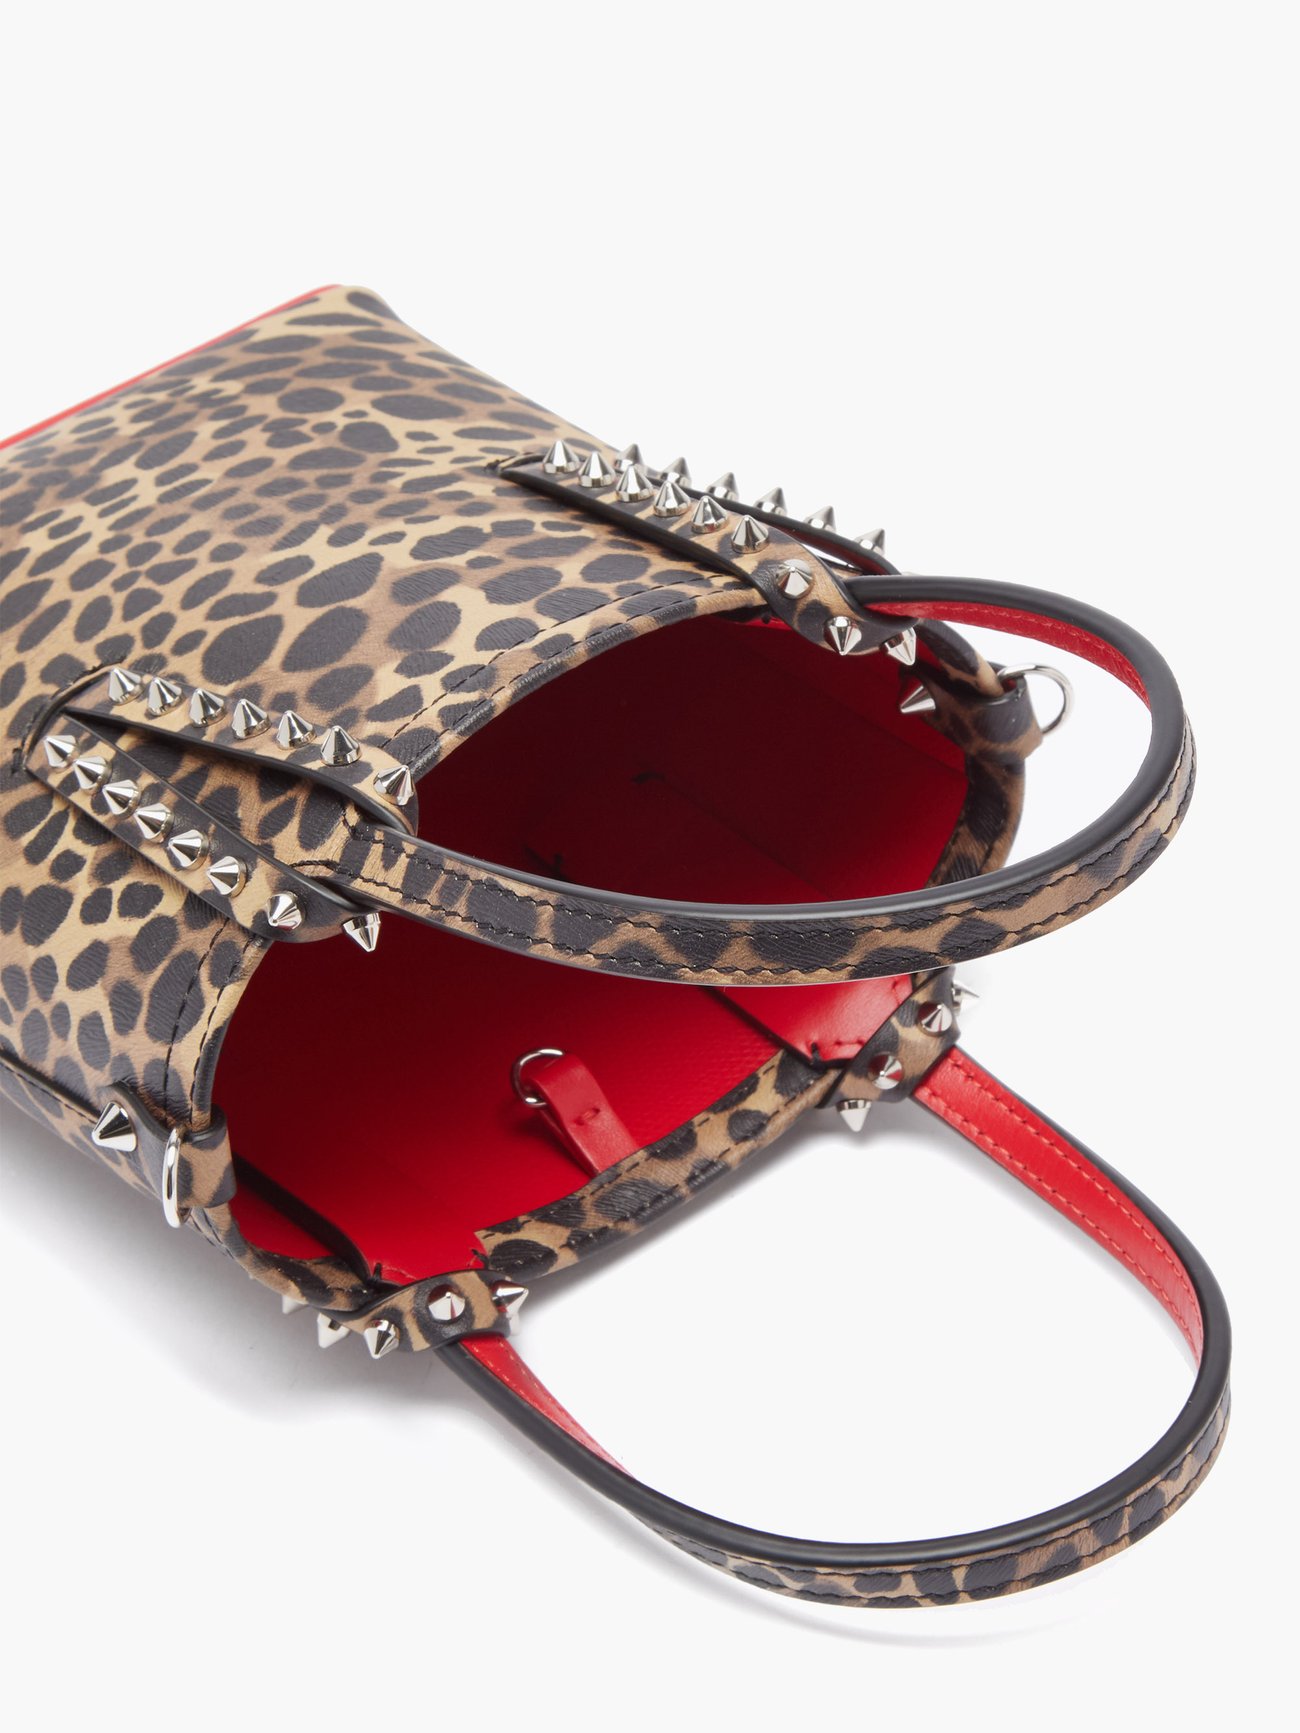 Christian Louboutin Mini Cabata Tiger Print Leather Tote Bag Brown Red NWT!  $950